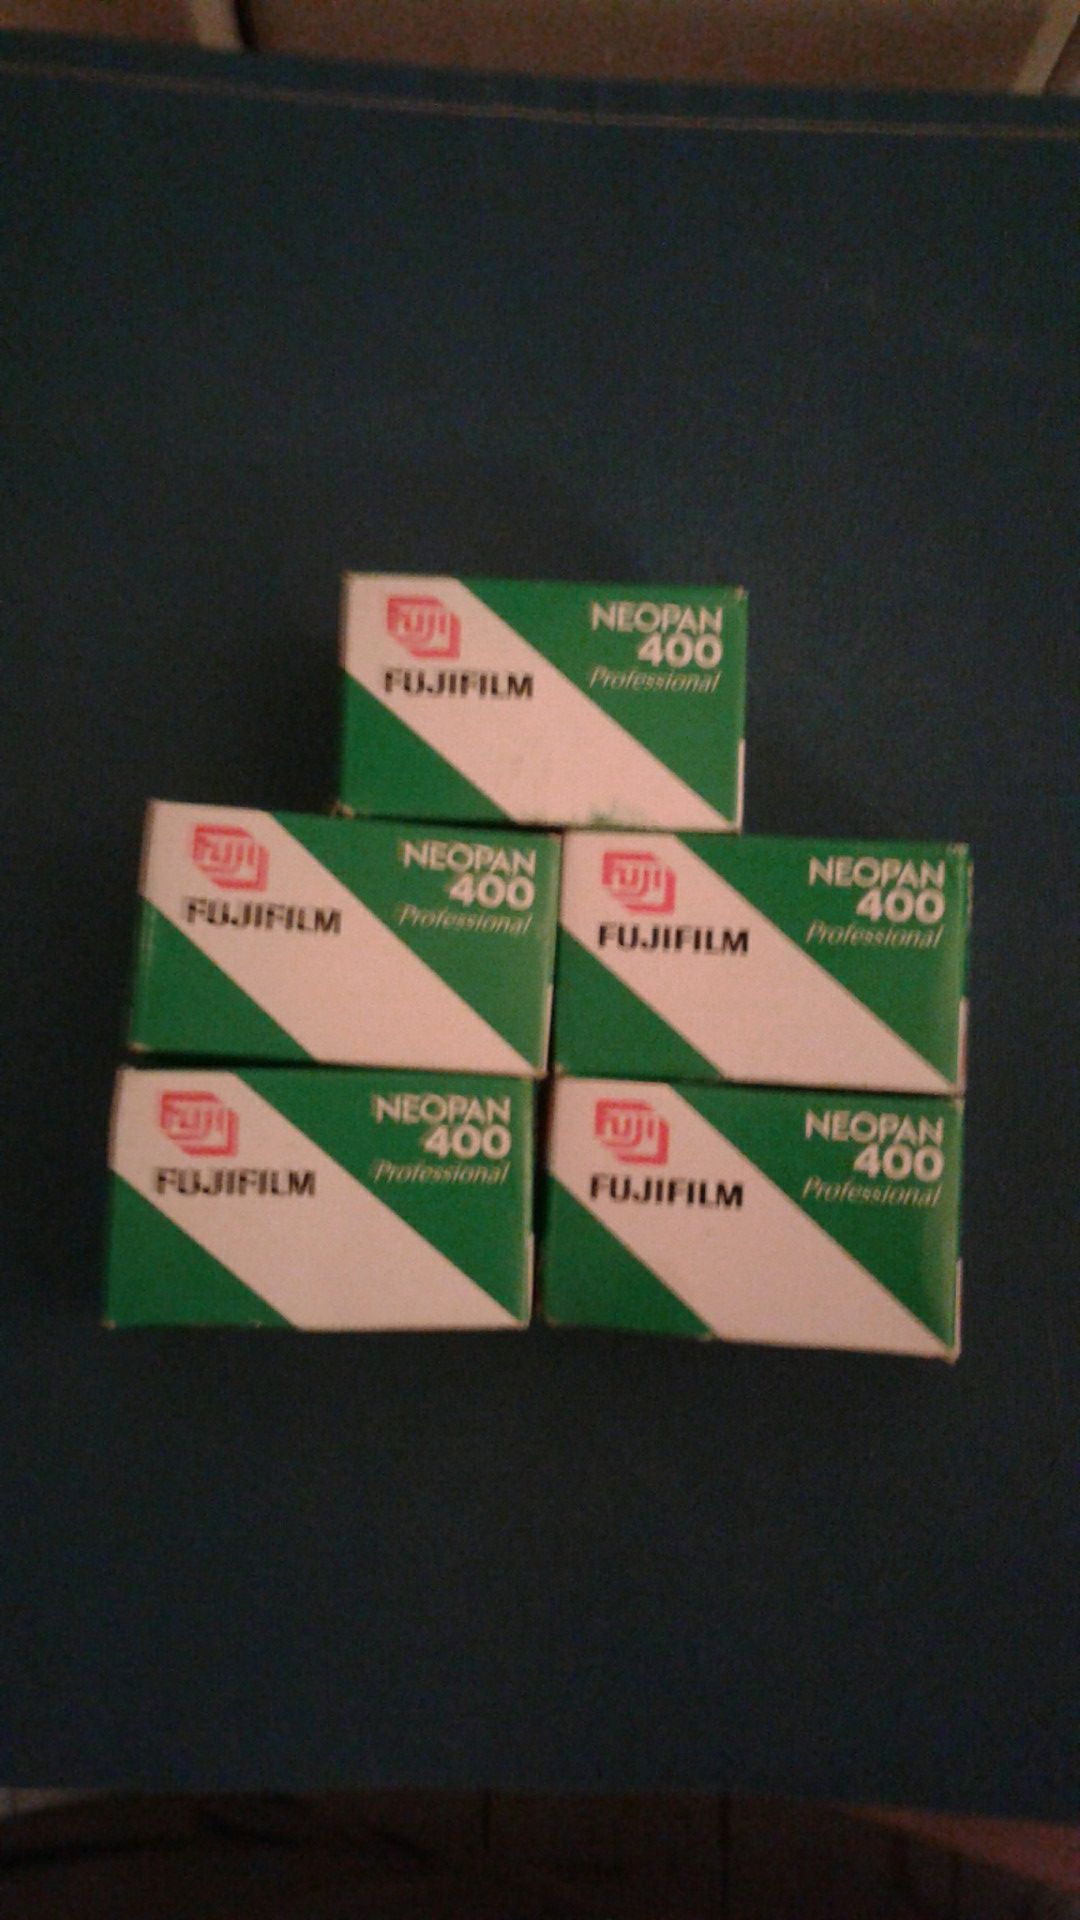 FujiFilm Neopan 400 Professional